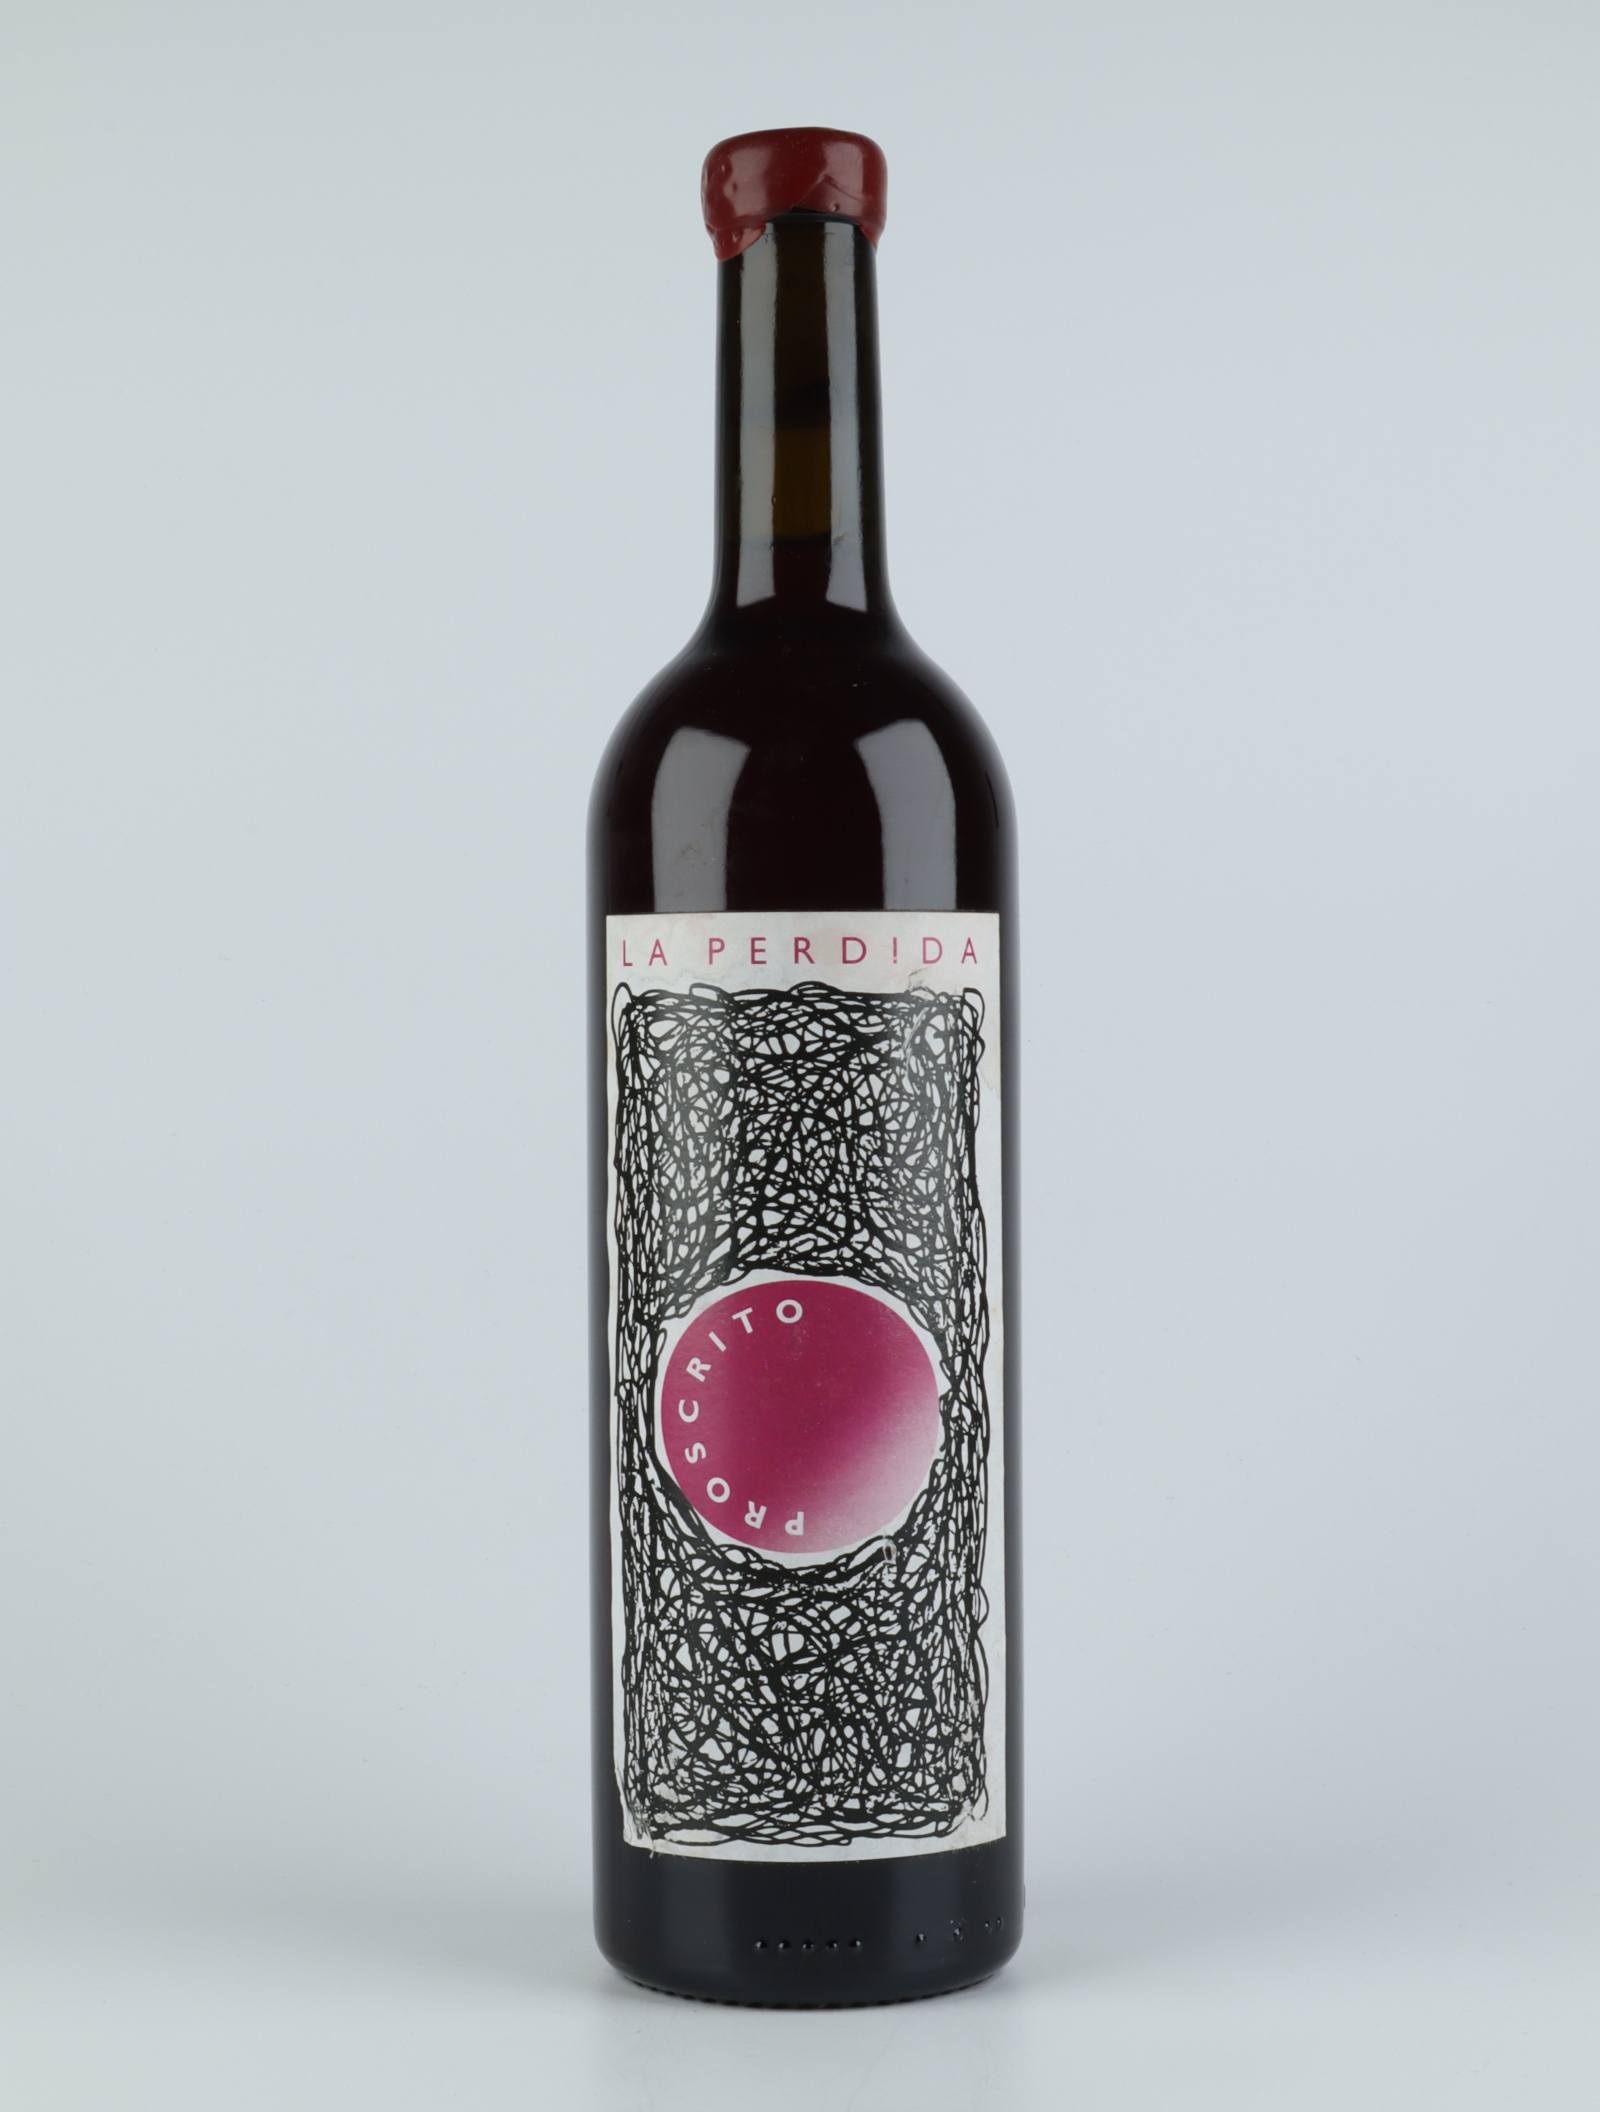 En flaske 2019 Proscrito Rosé fra La Perdida, Ribeira Sacra i Spanien